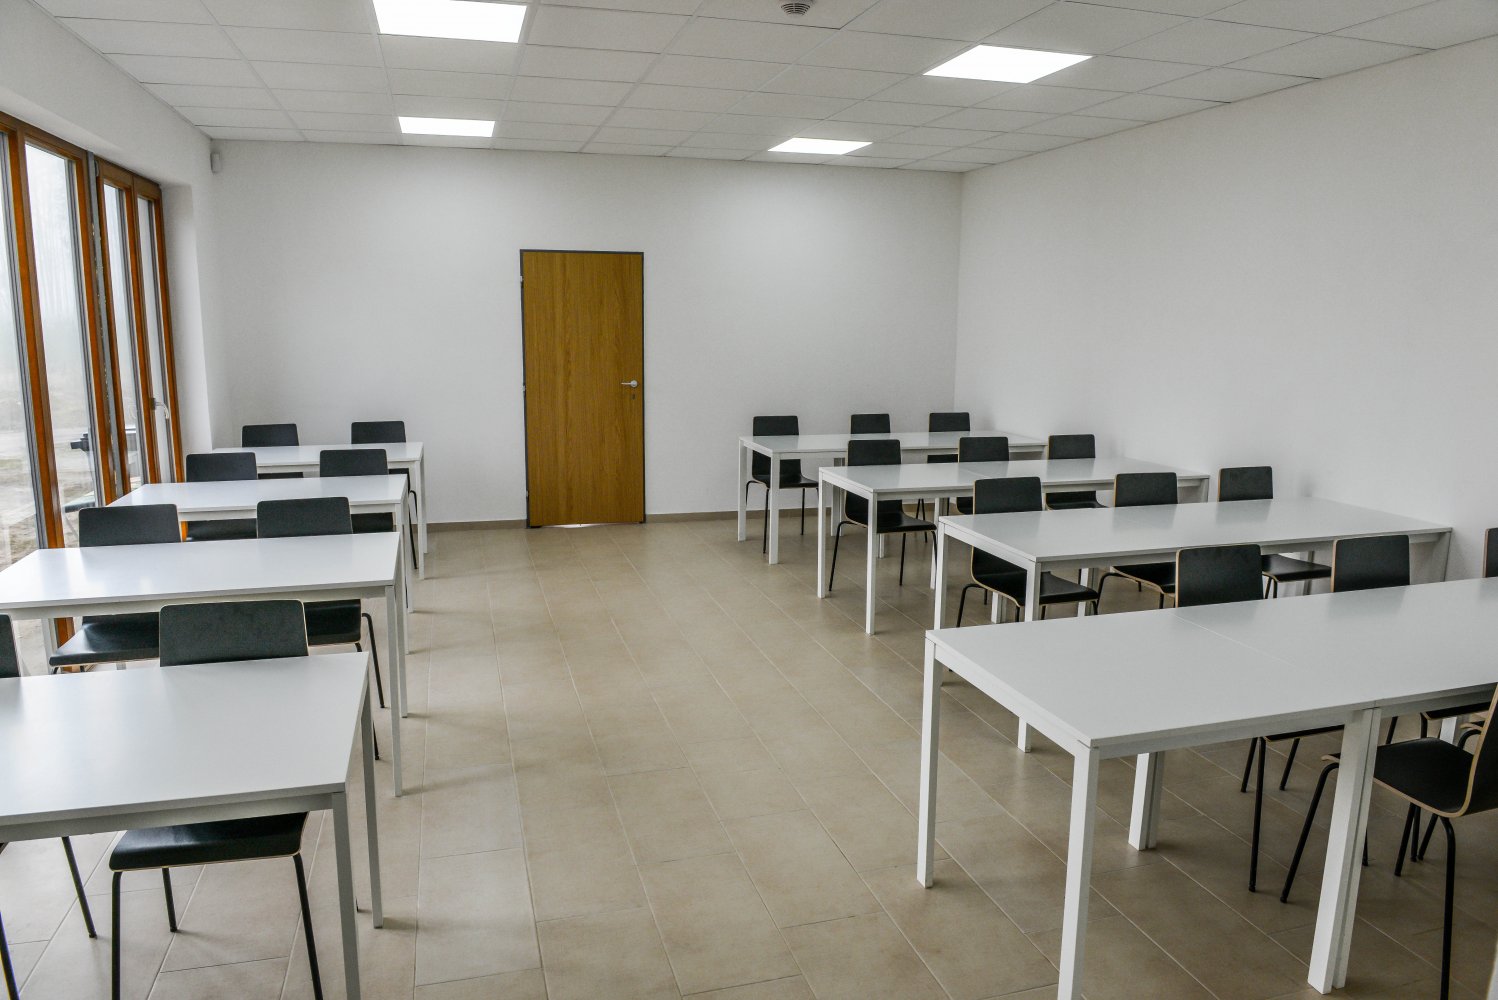 Classroom 01.jpg